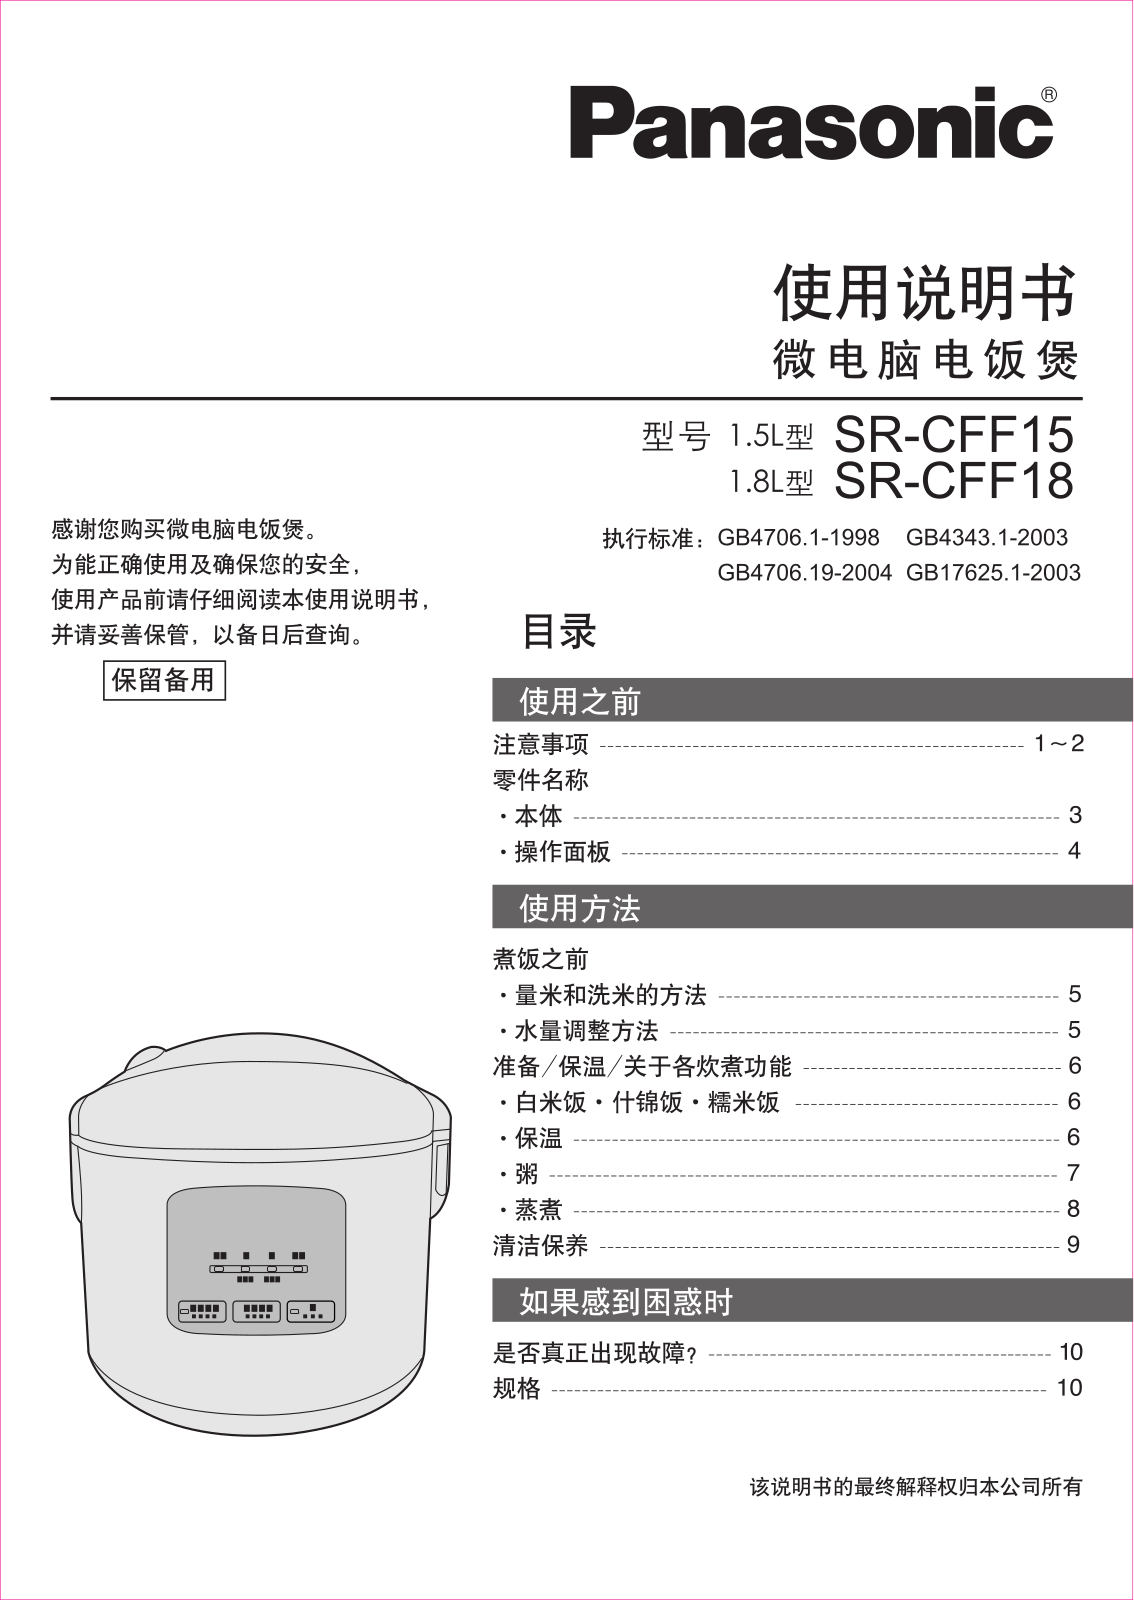 Panasonic SR-CFF15, SR-CFF18 User Manual